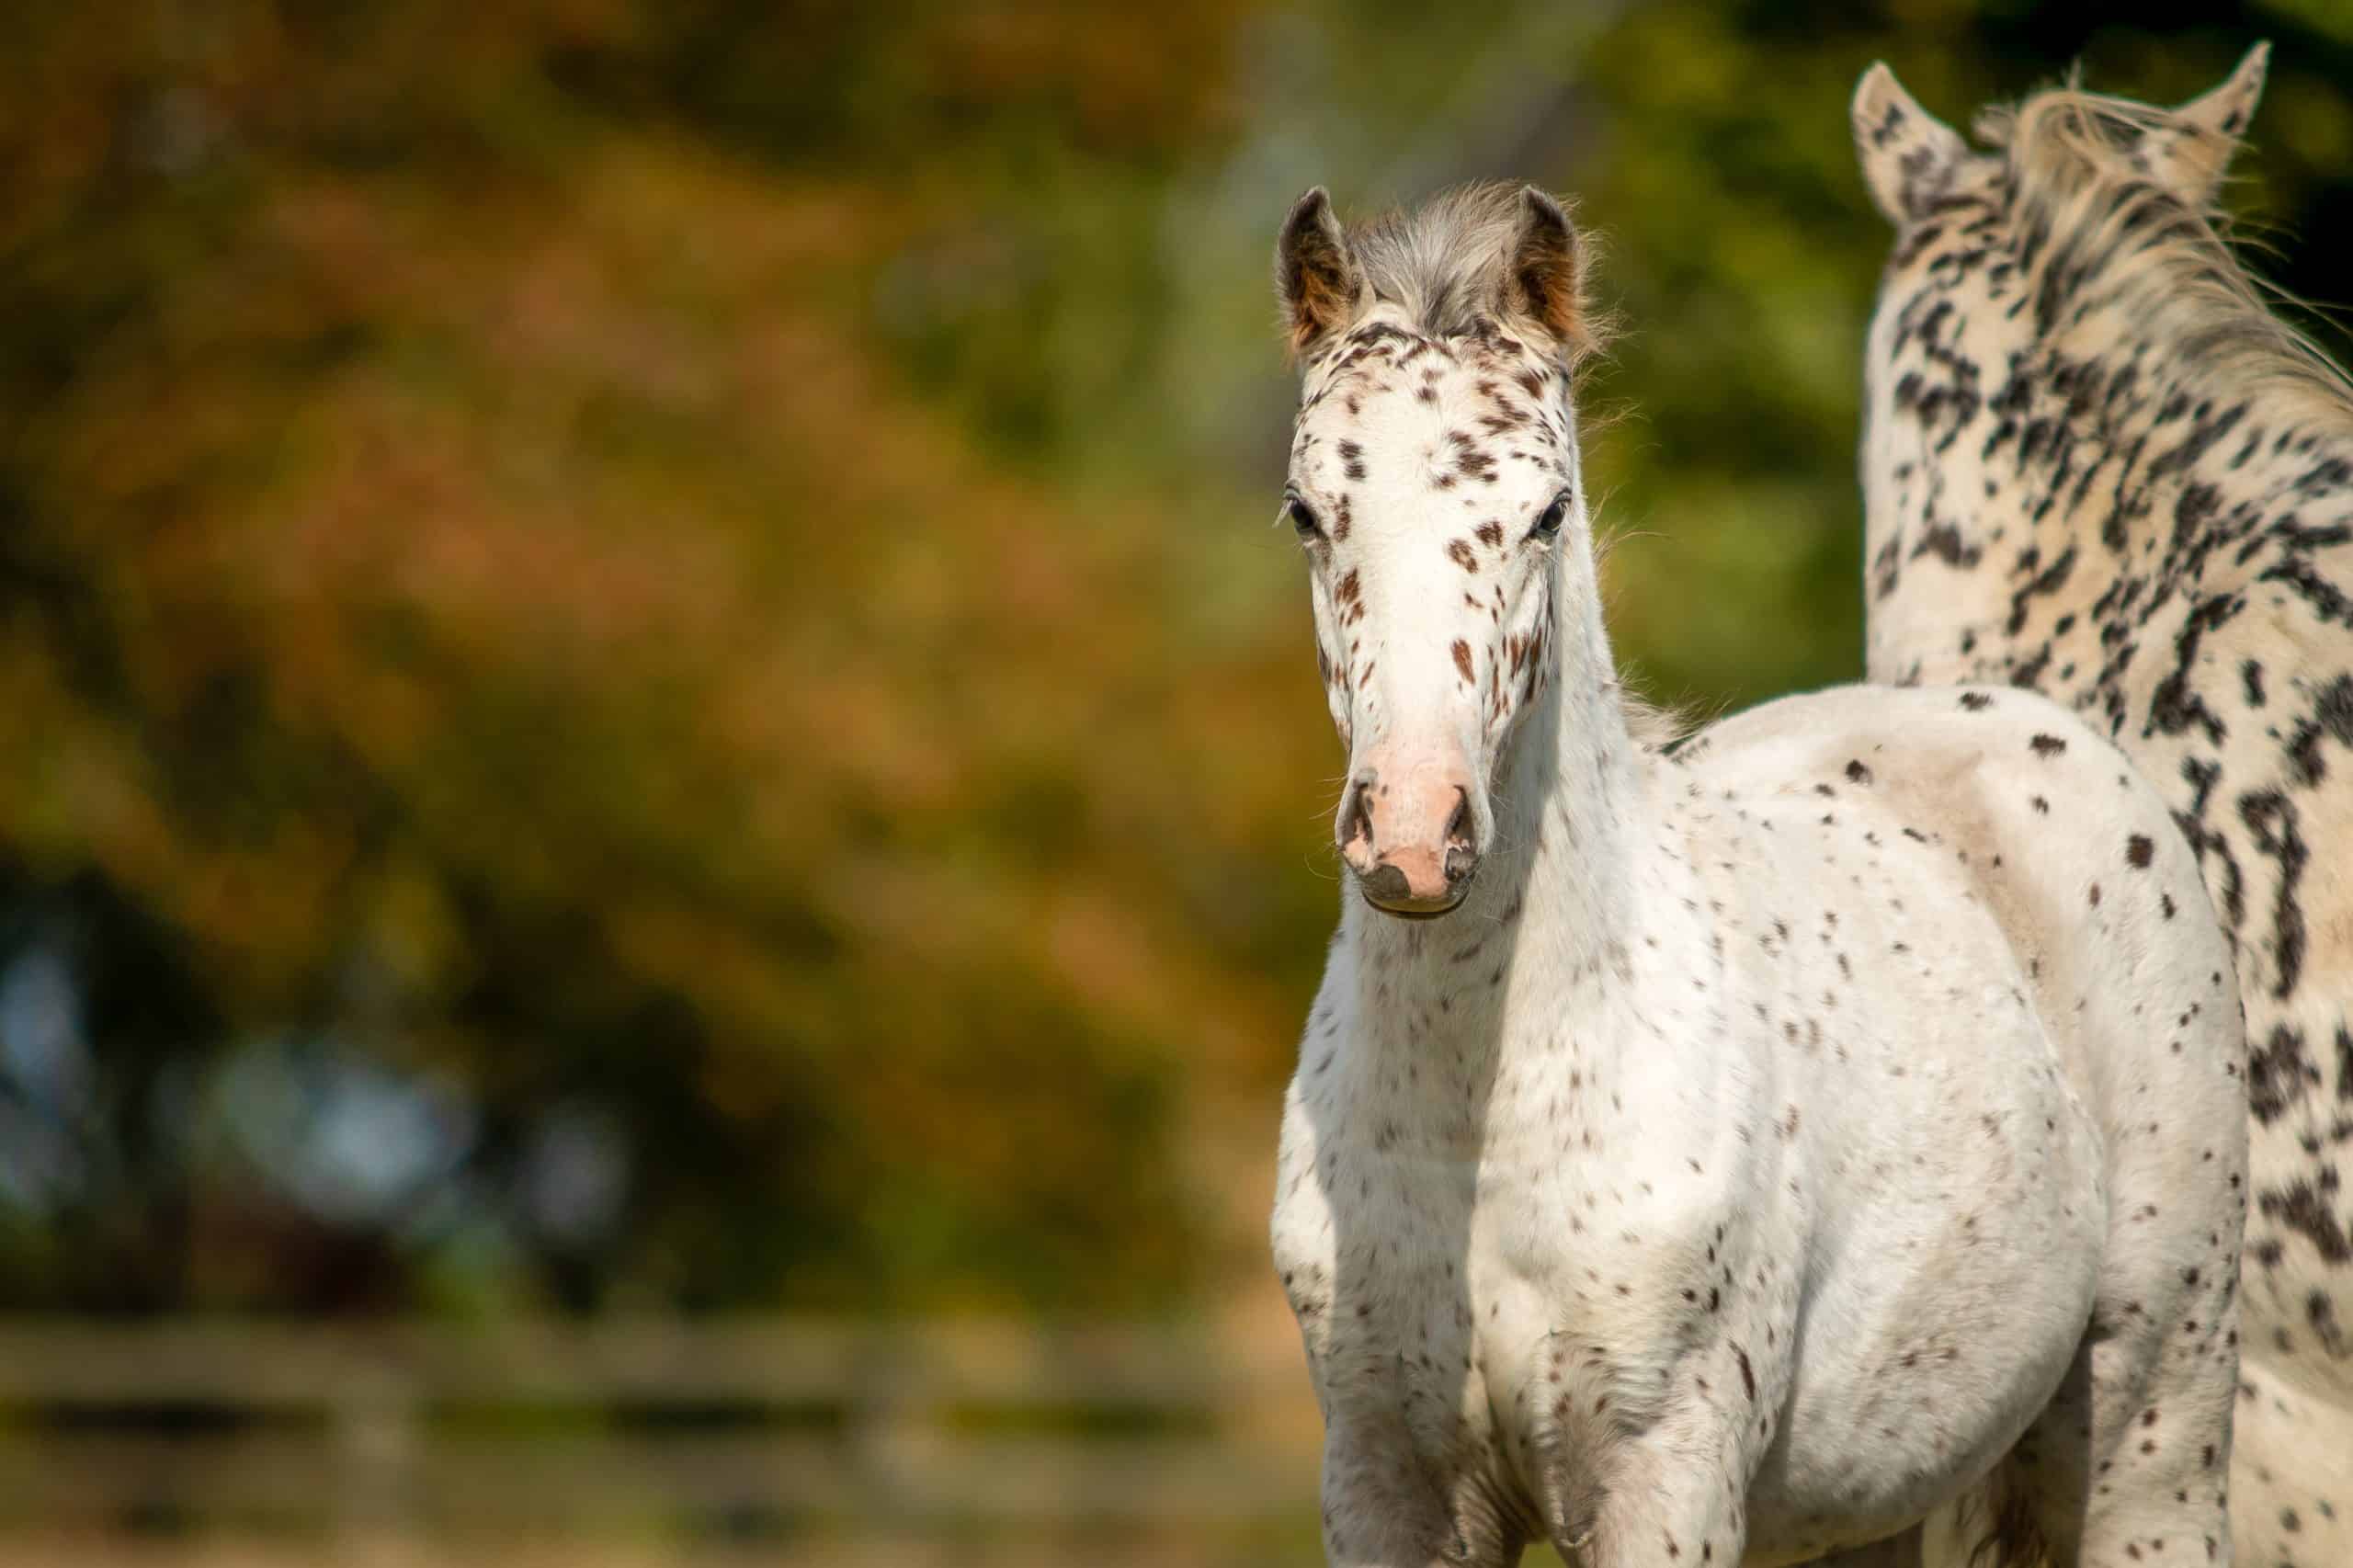 Knabstrupper Appaloosa Spotted Pony Foal in Grass Pasture